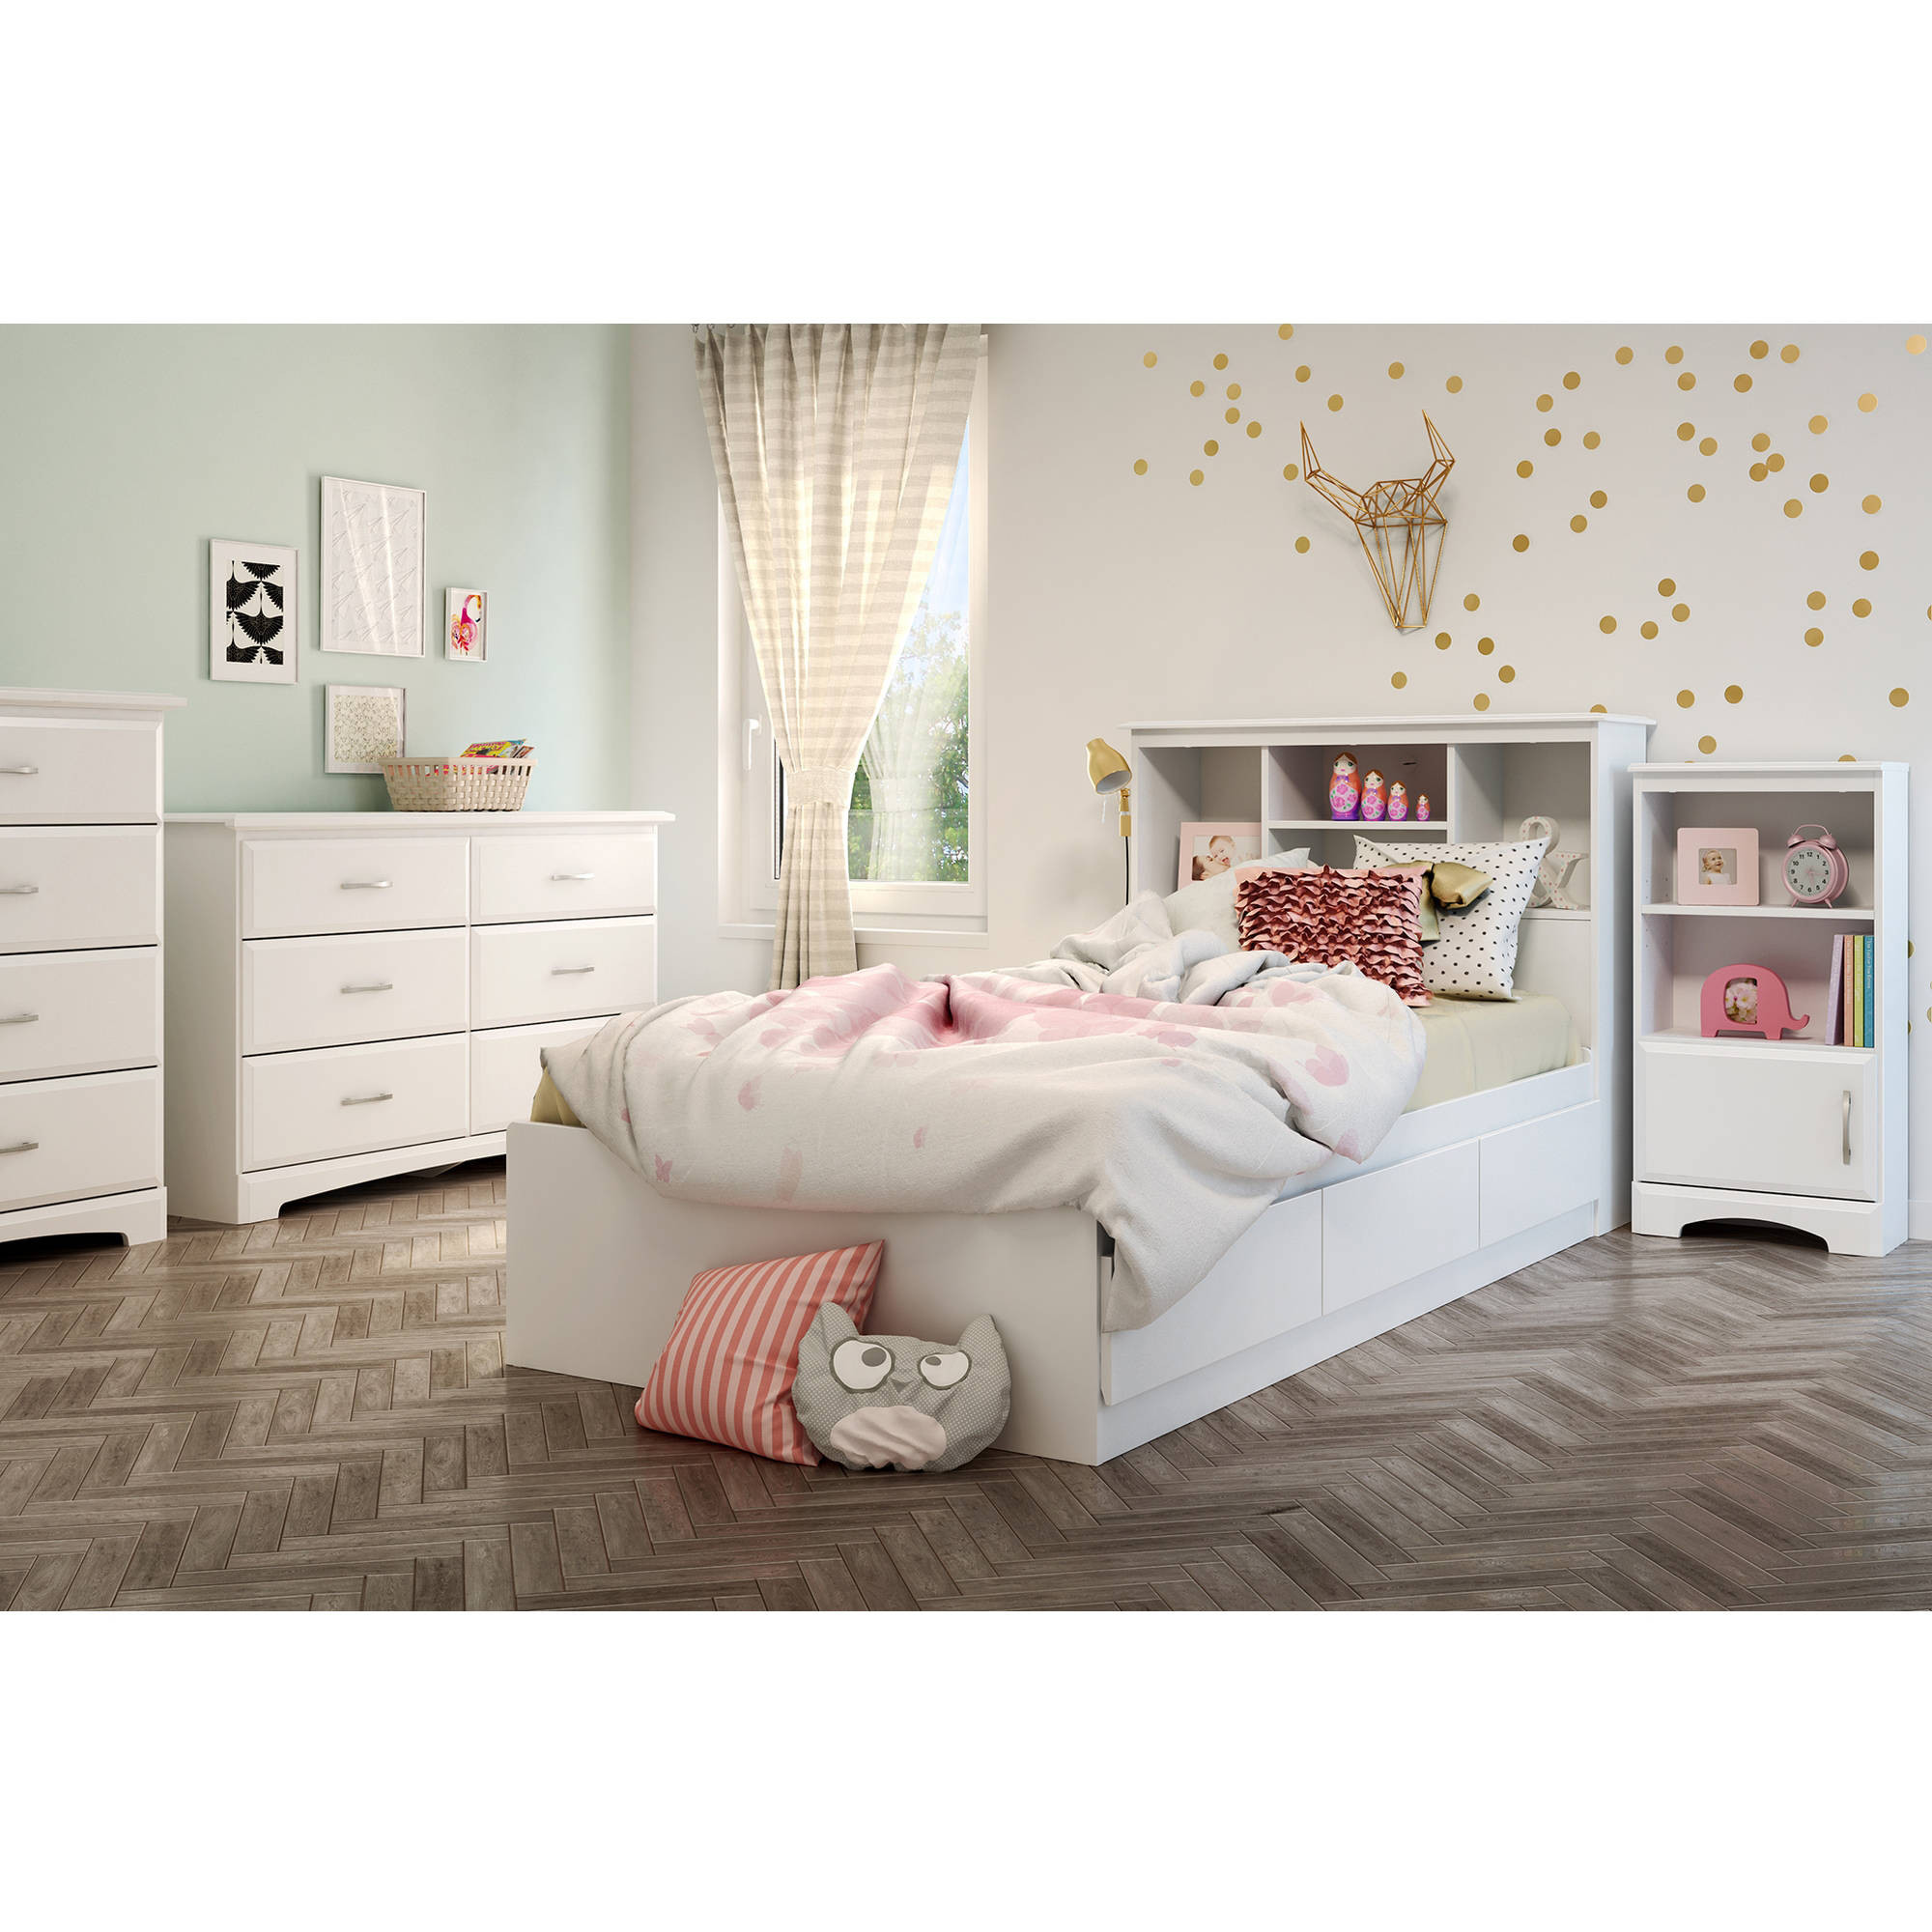 Walmart Bedroom Sets For Kids
 South Shore Callesto Kids Bedroom Furniture Collection